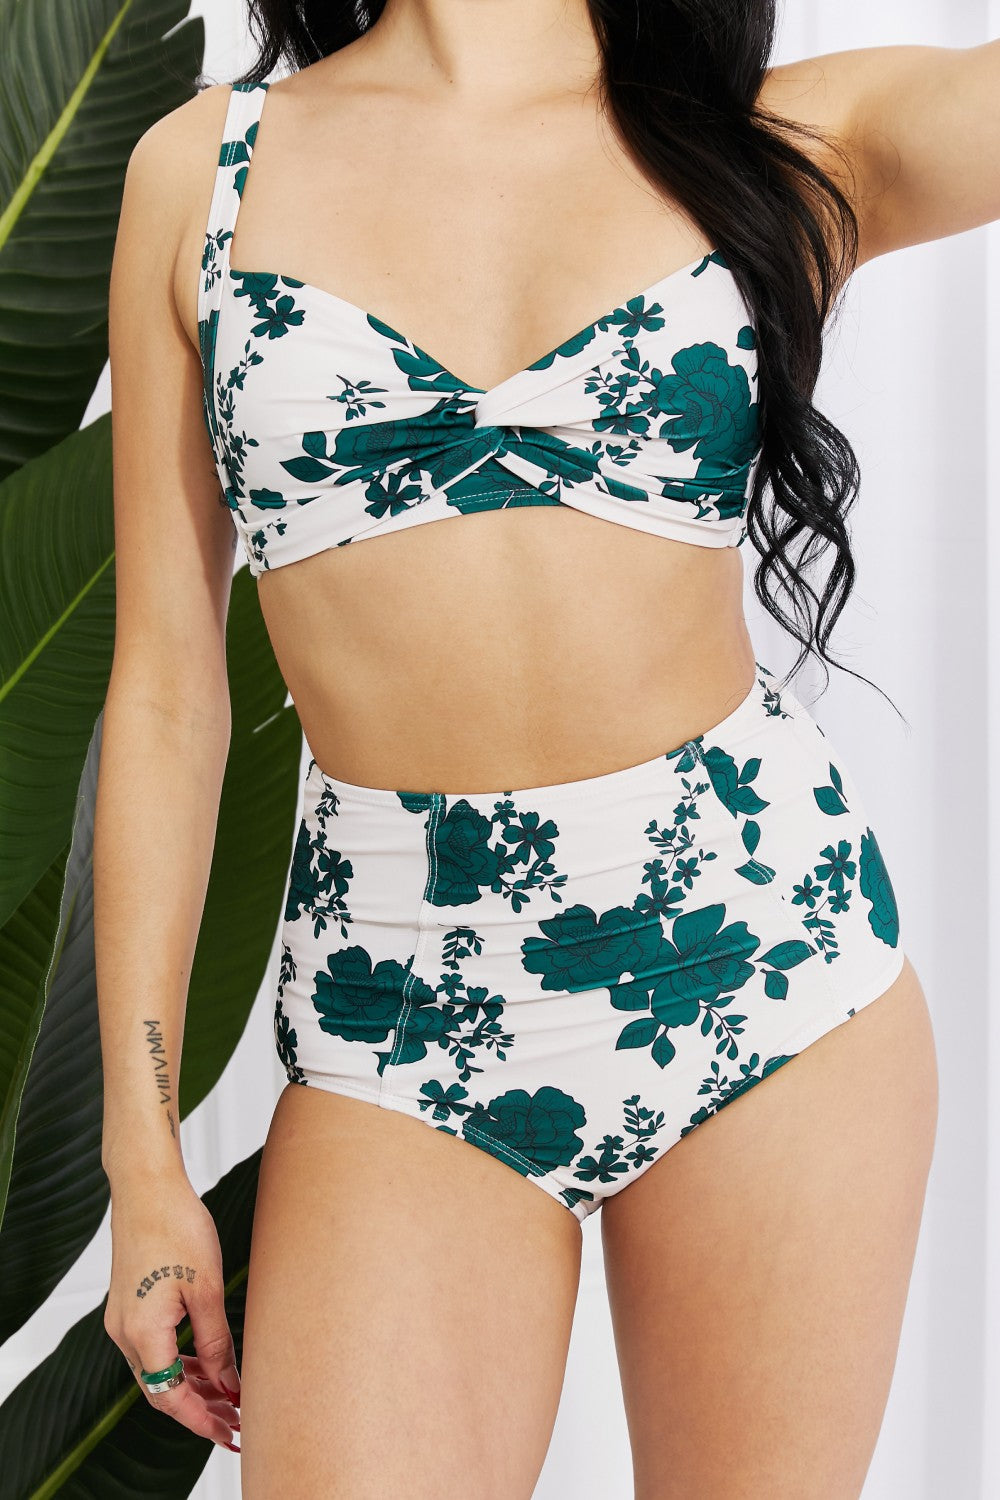 Marina West Swim Take A Dip Twist High-Rise Bikini in Forest Print on any thing USA/STOD clothes